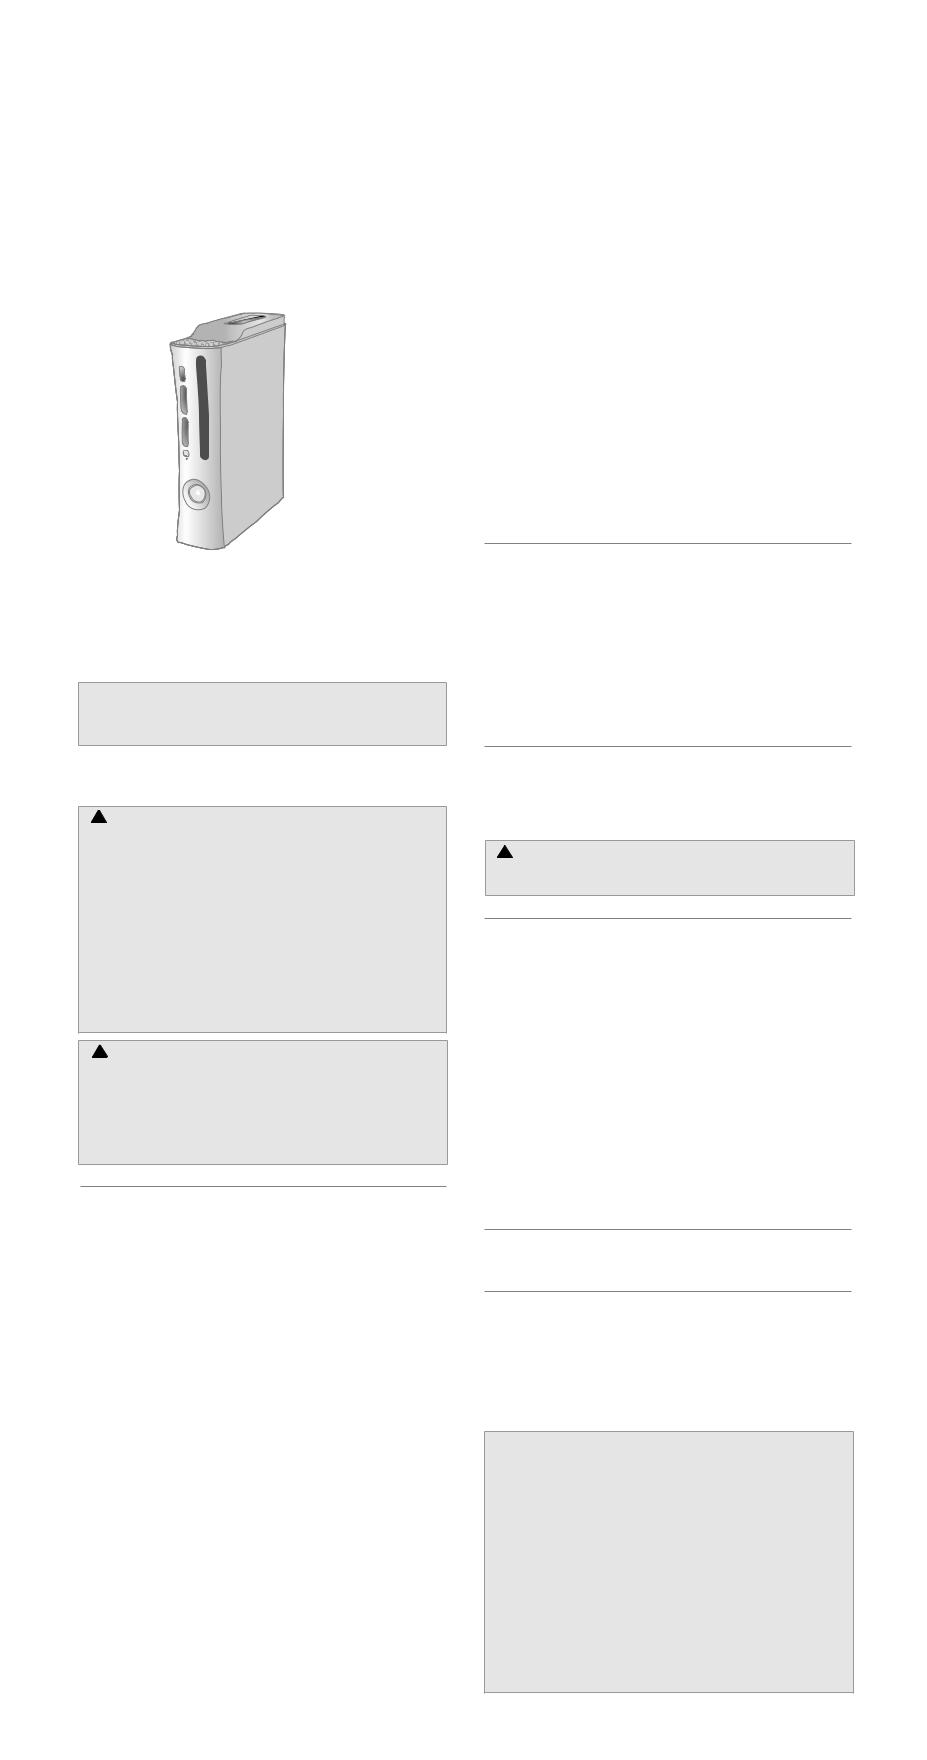 Microsoft XBOX 360 PLAY  CHARGE KIT User Manual